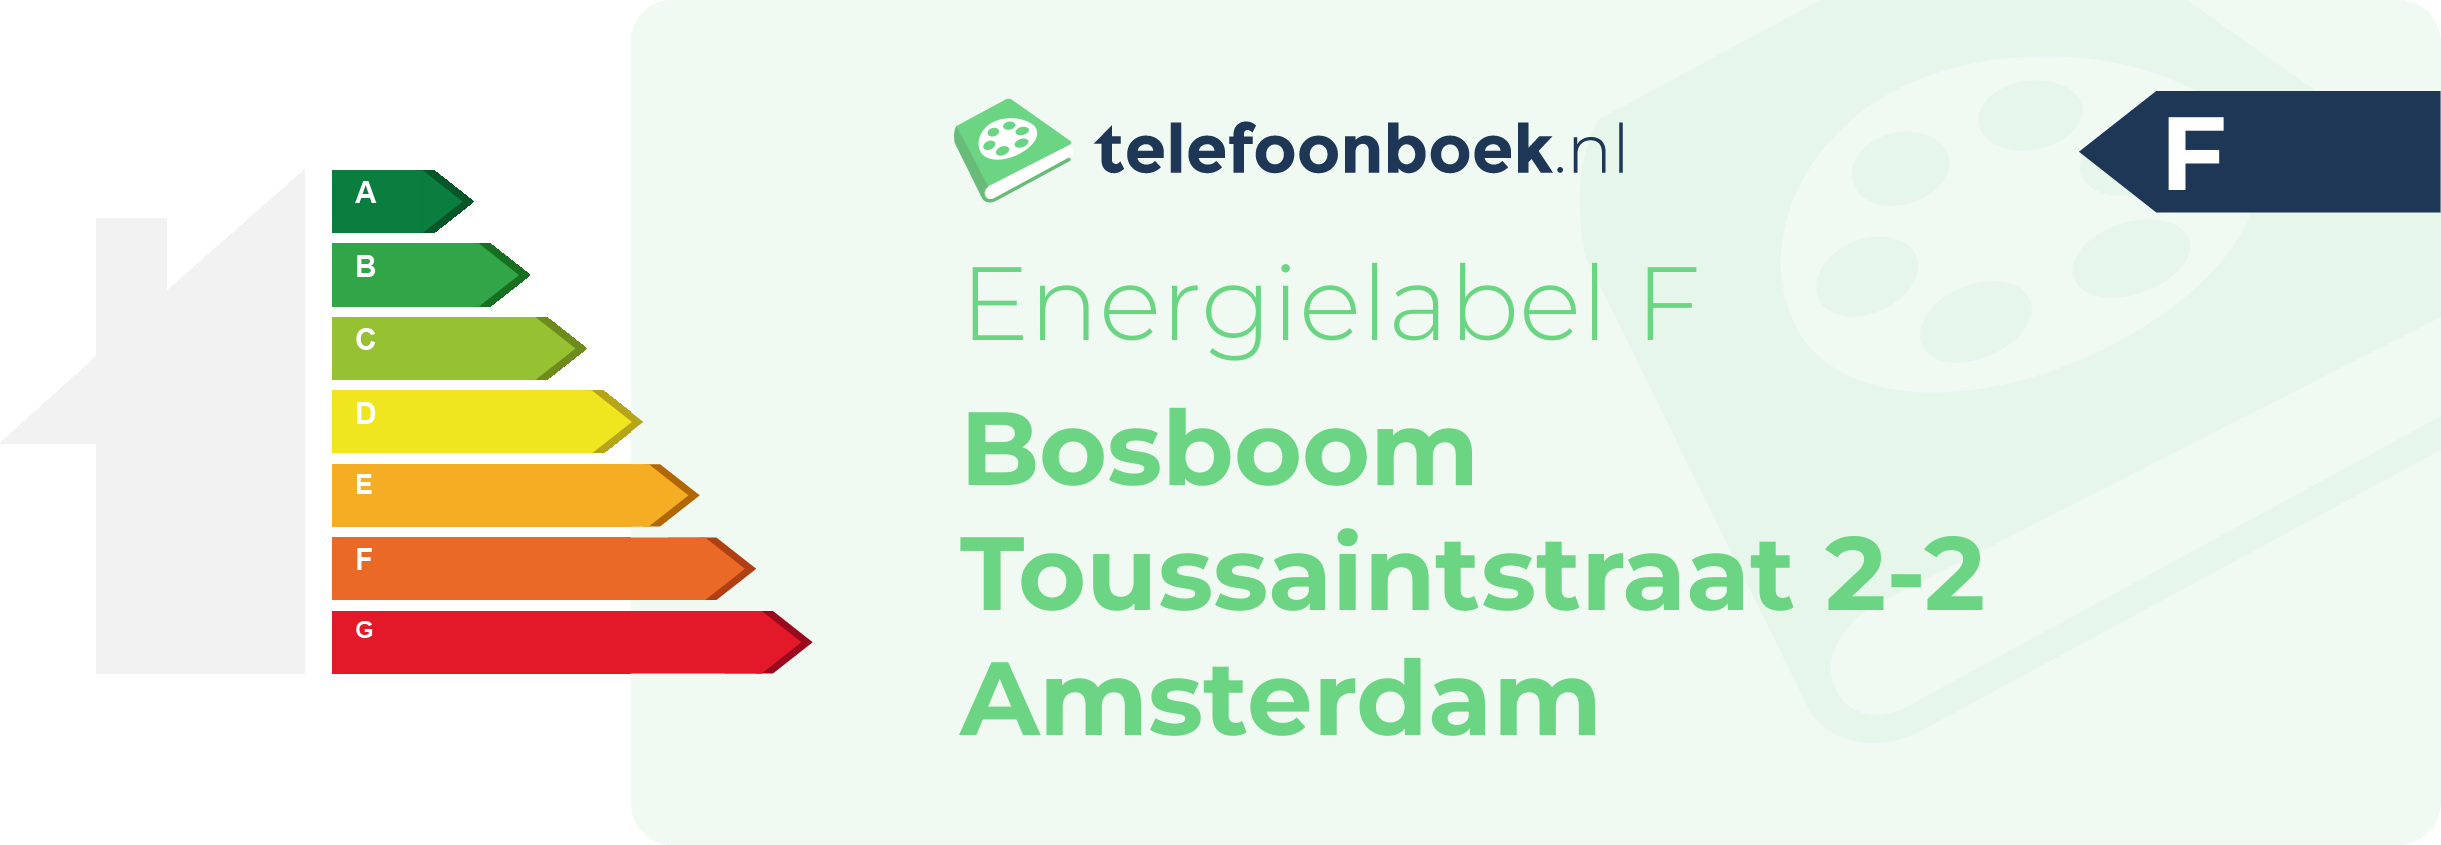 Energielabel Bosboom Toussaintstraat 2-2 Amsterdam